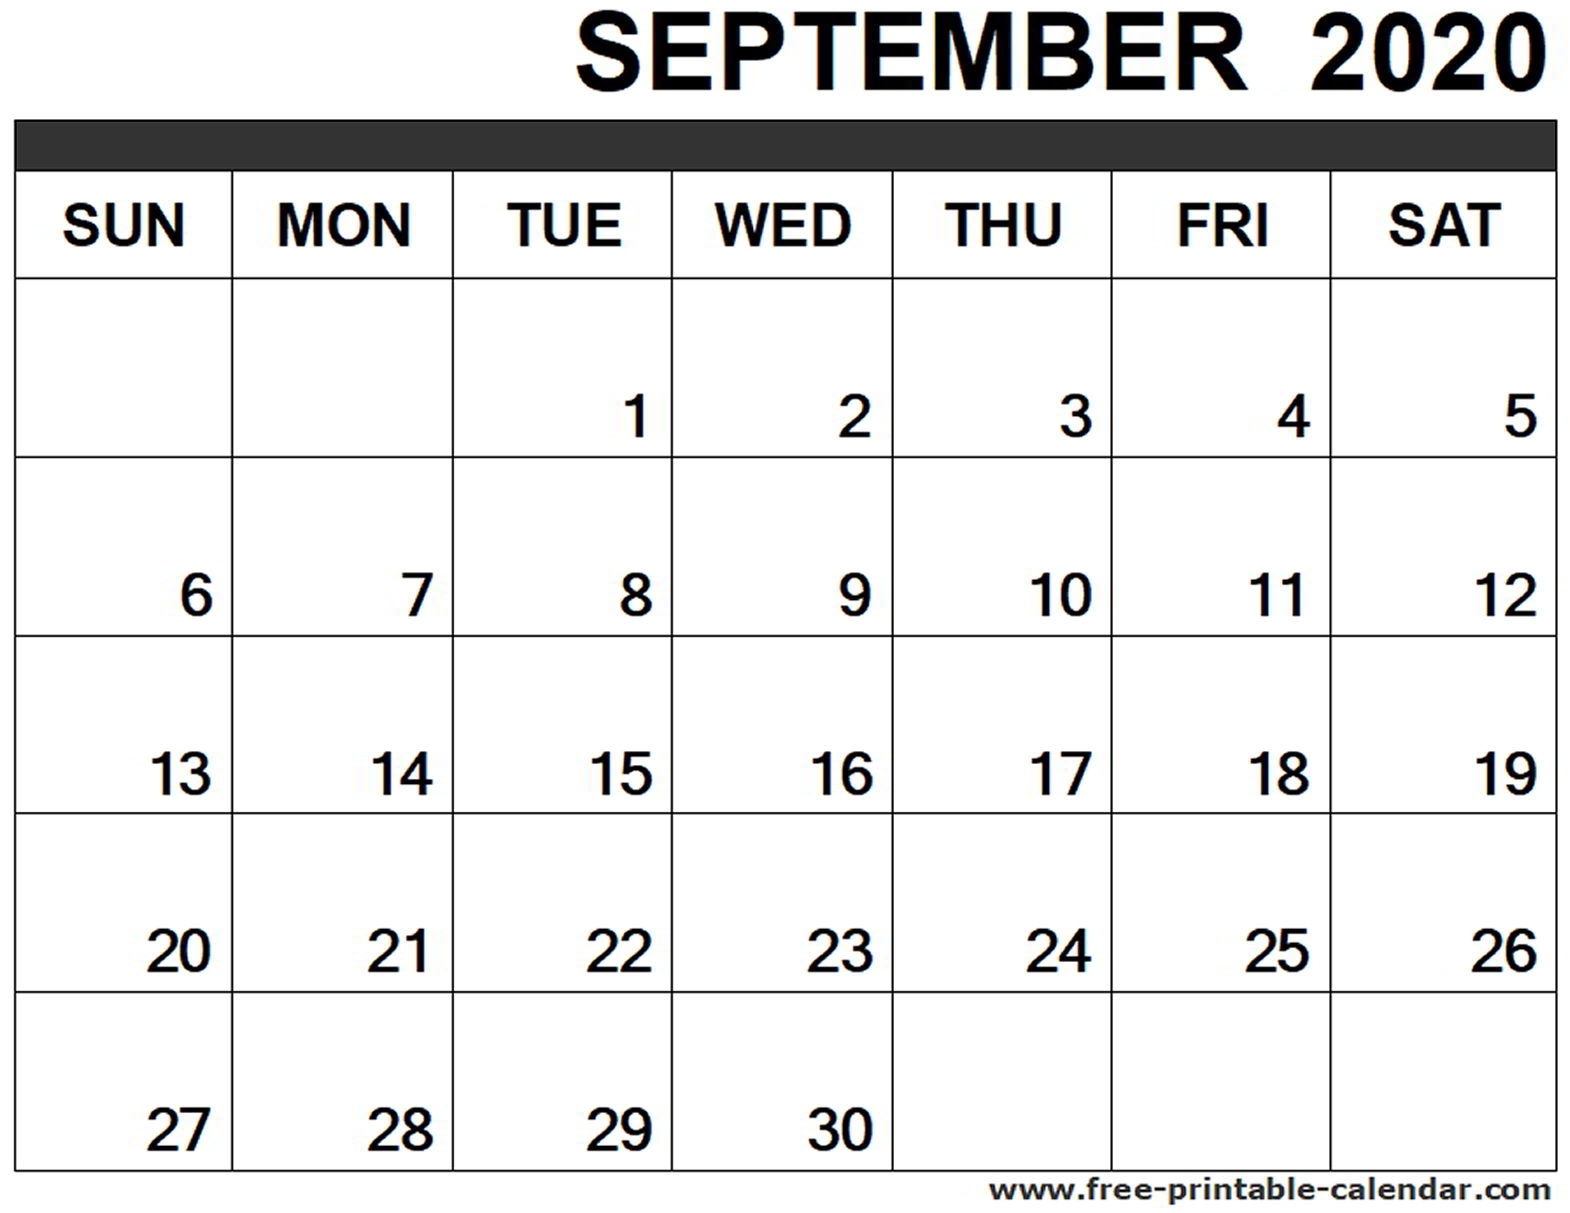 September 2020 Calendar Printable - Free-Printable-Calendar Incredible September 2020 Calendar Canada